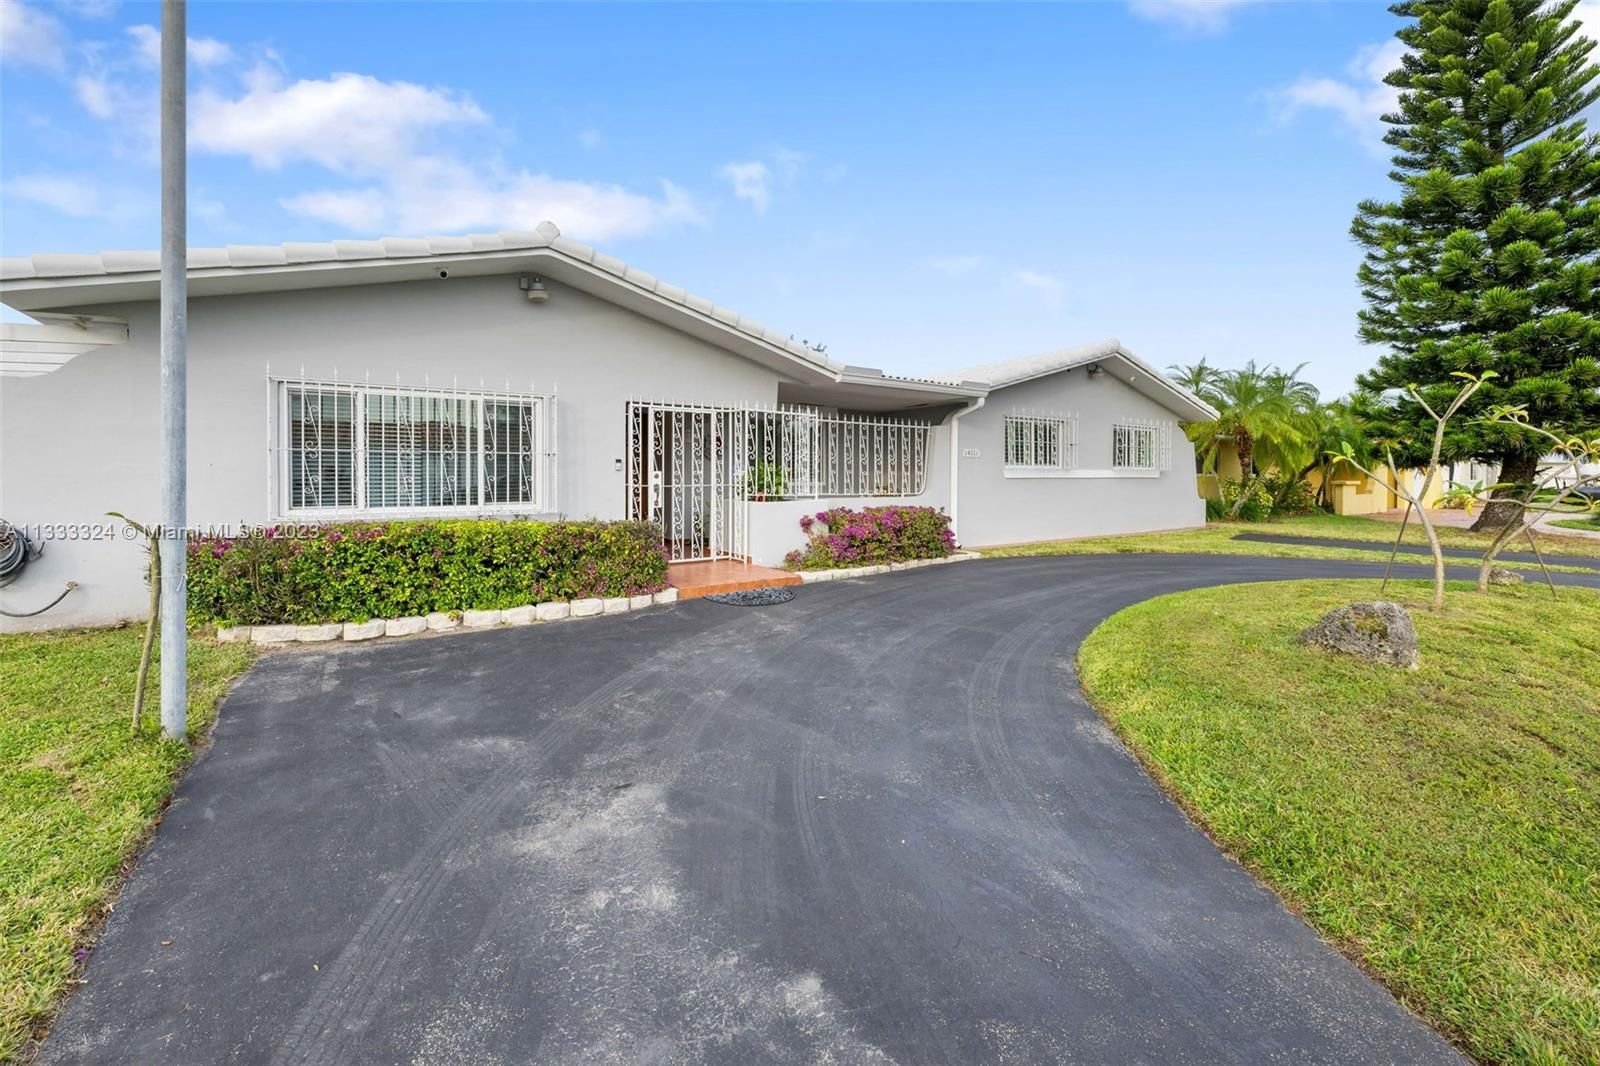 Real estate property located at 10321 17th St, Miami-Dade County, Miami, FL